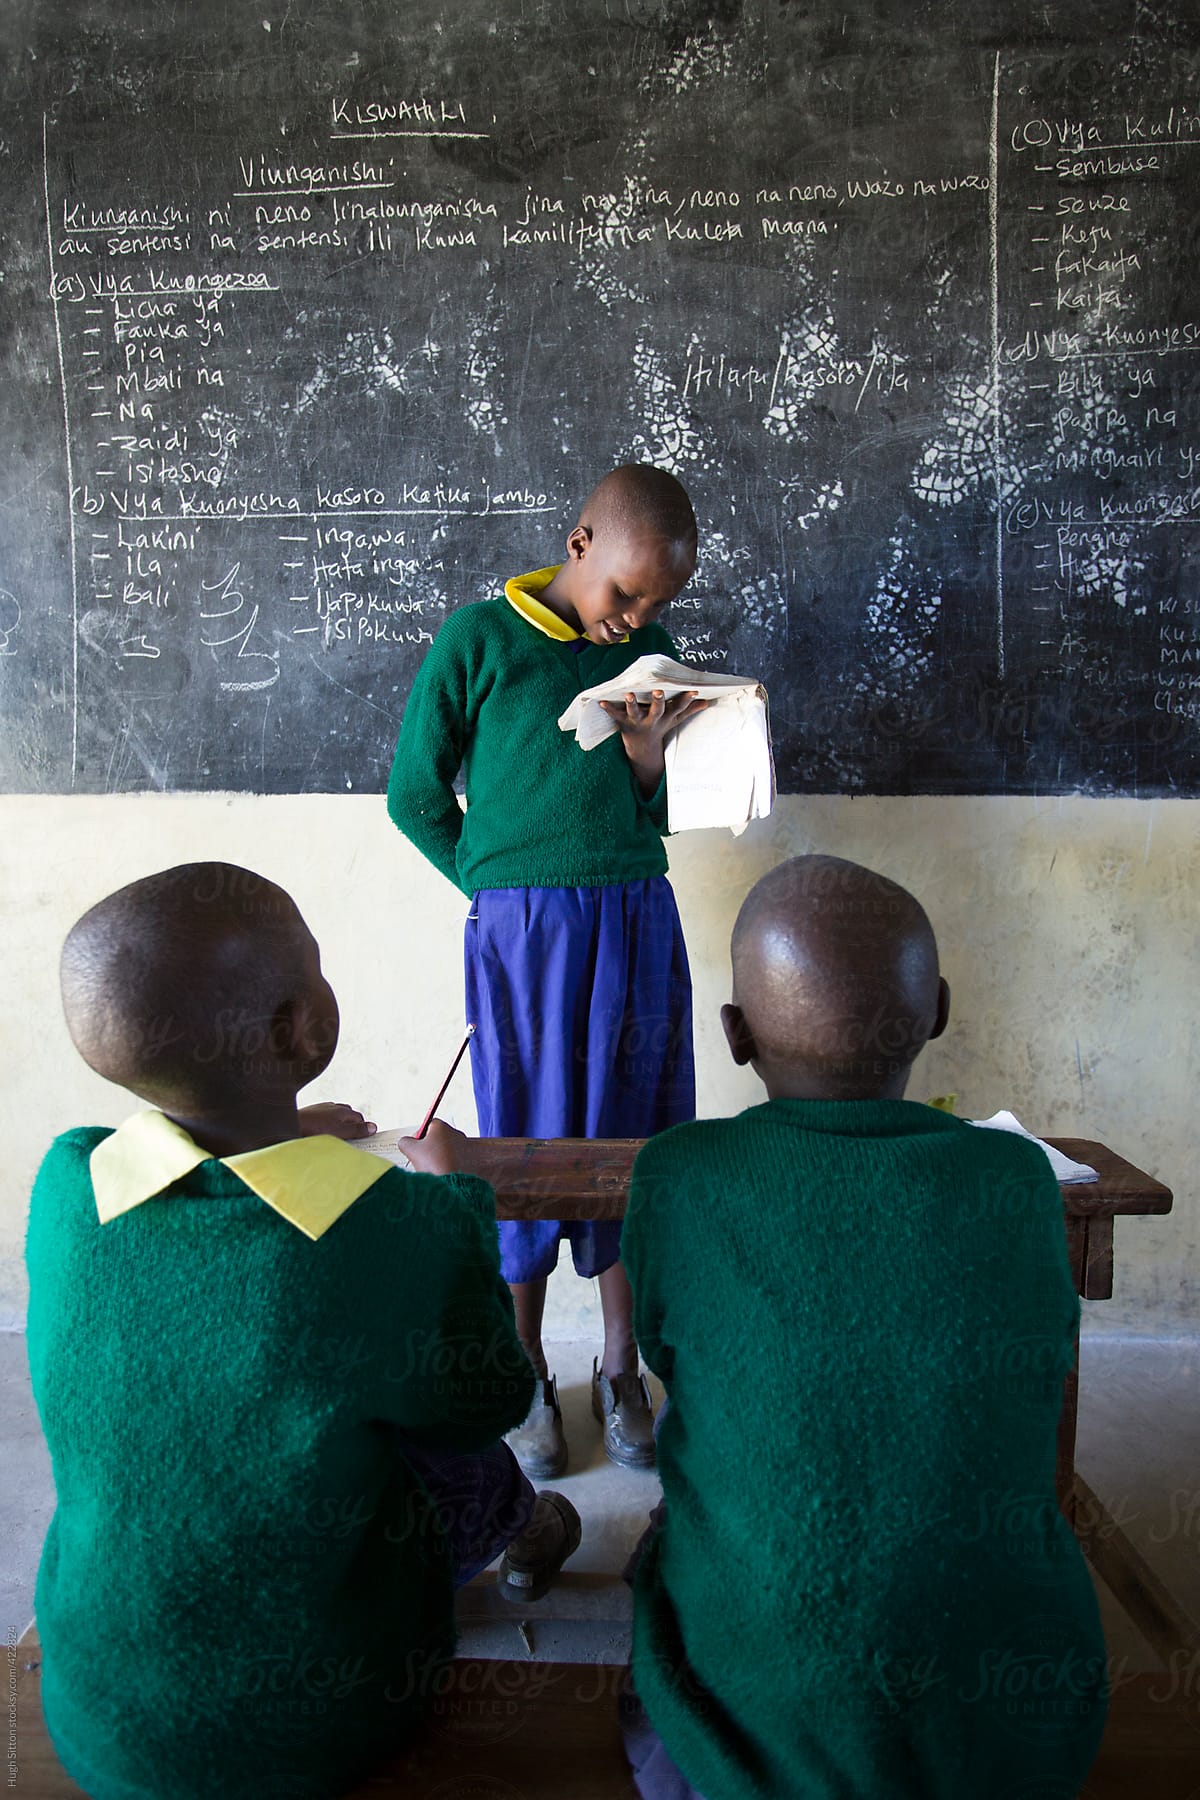 Kenyan school children. Kenya, Africa.